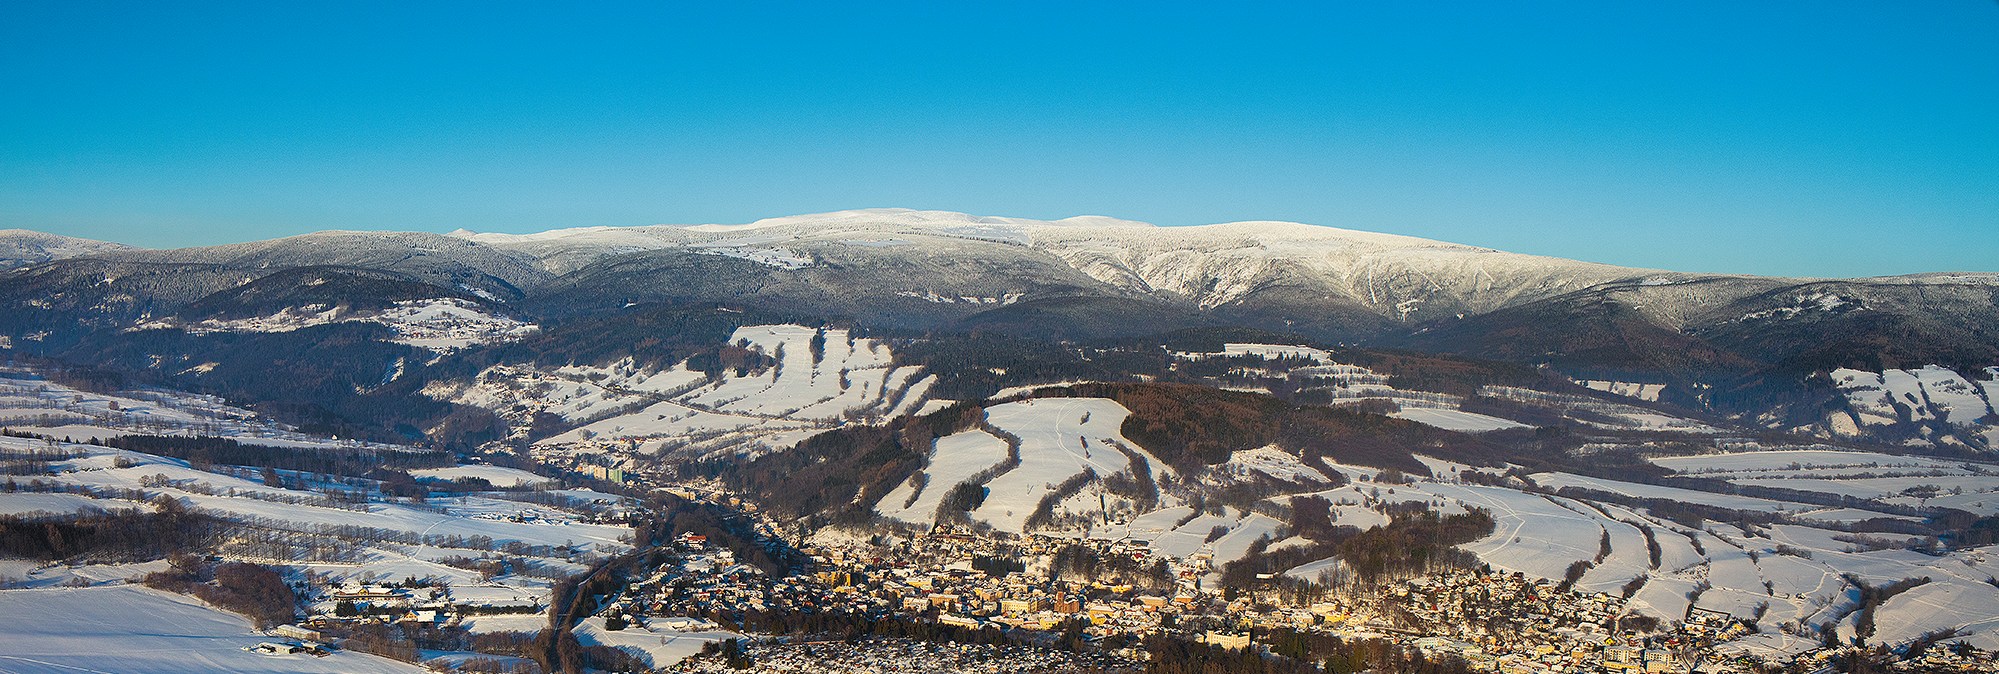 Winter view of Vrchlabí